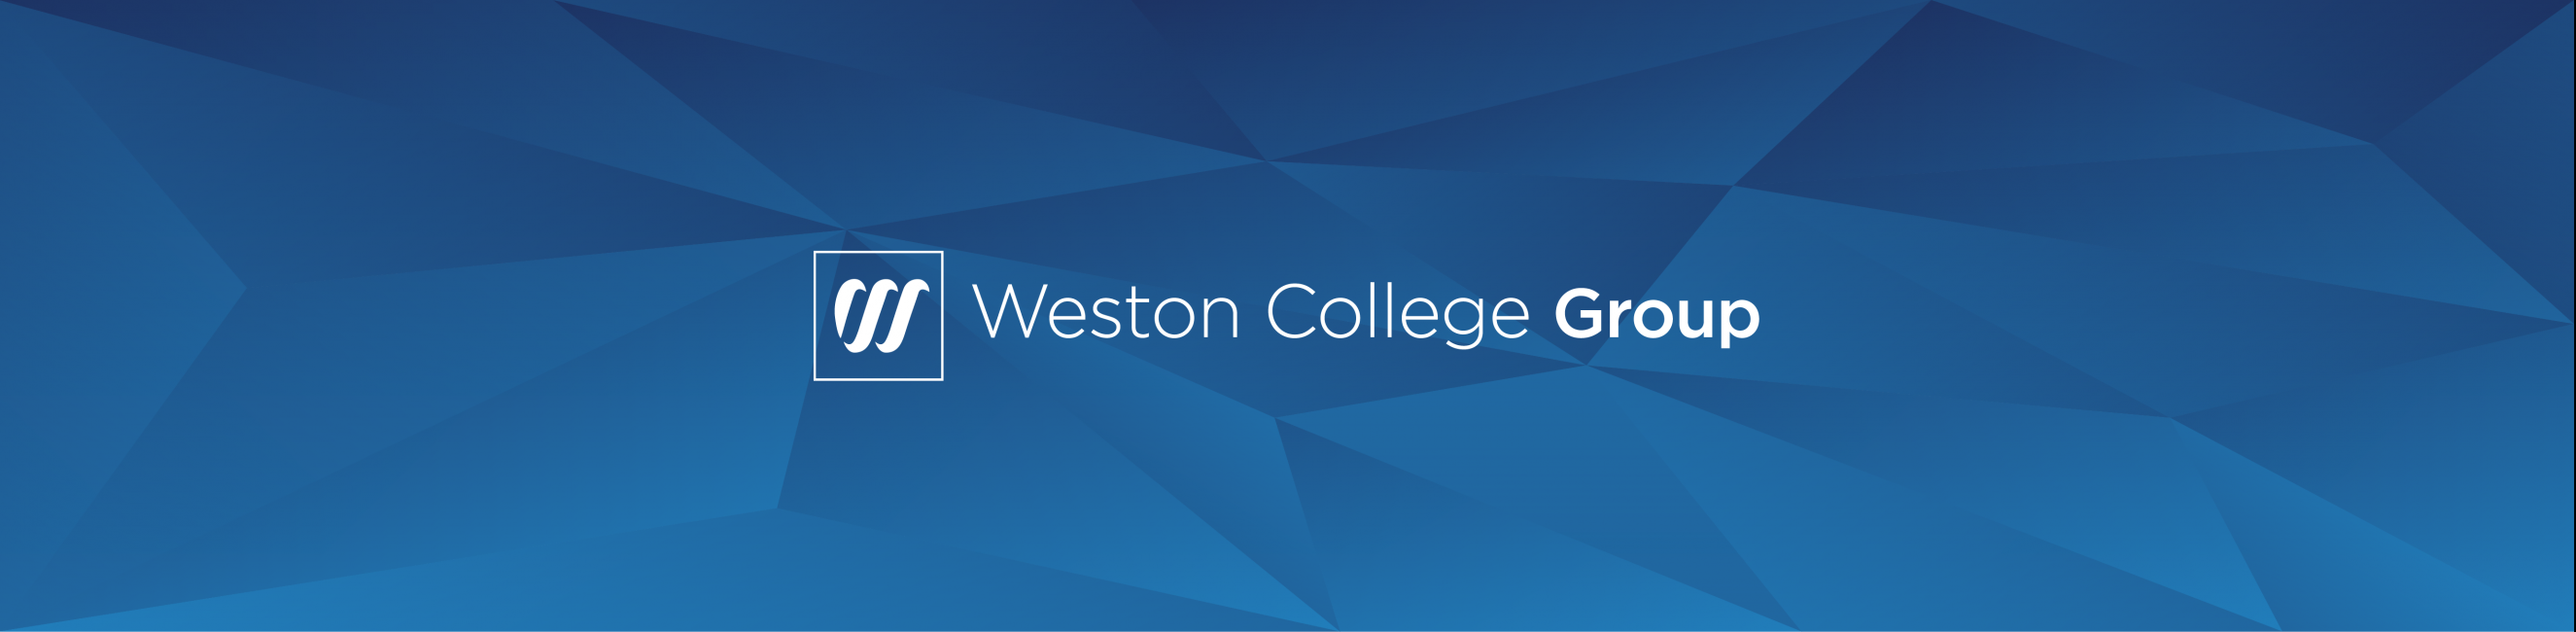 Weston college group